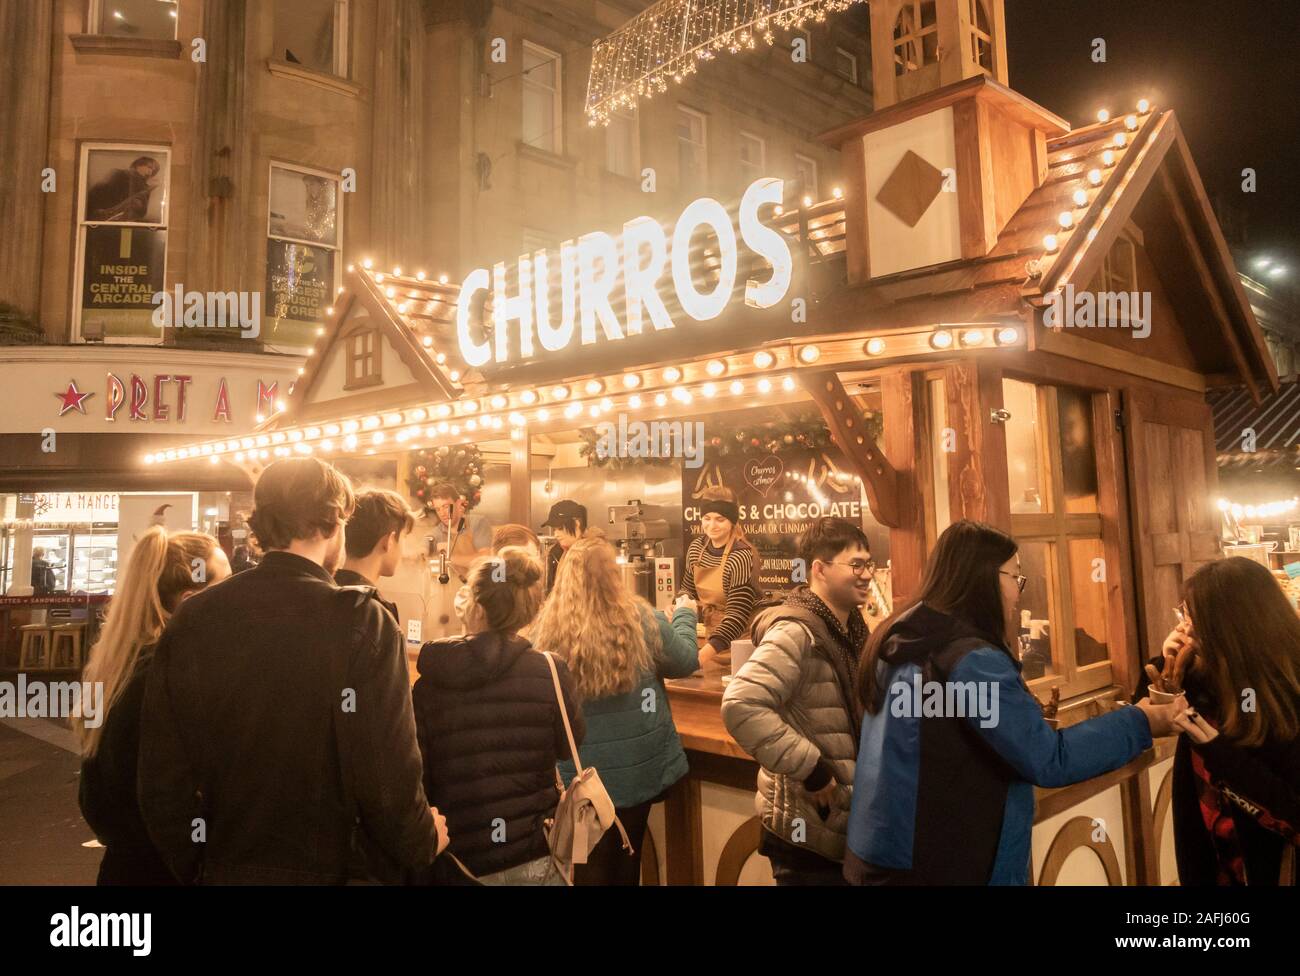 Churros food stall at Newcastle Christmas market. Newcastle upon Tyne.UK Stock Photo